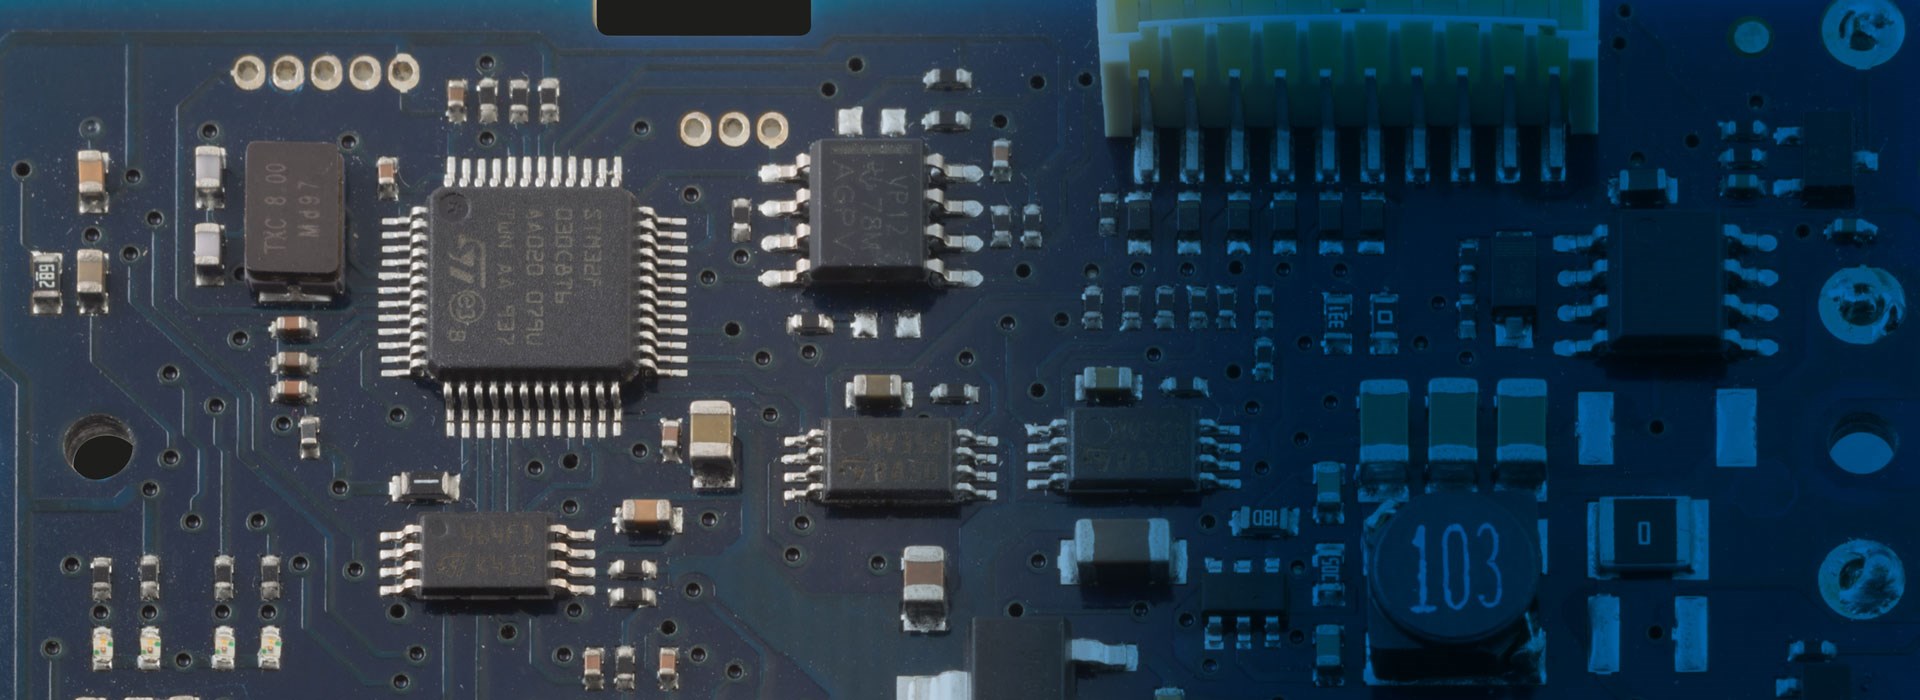 32-bit microprocessor Digmed valve